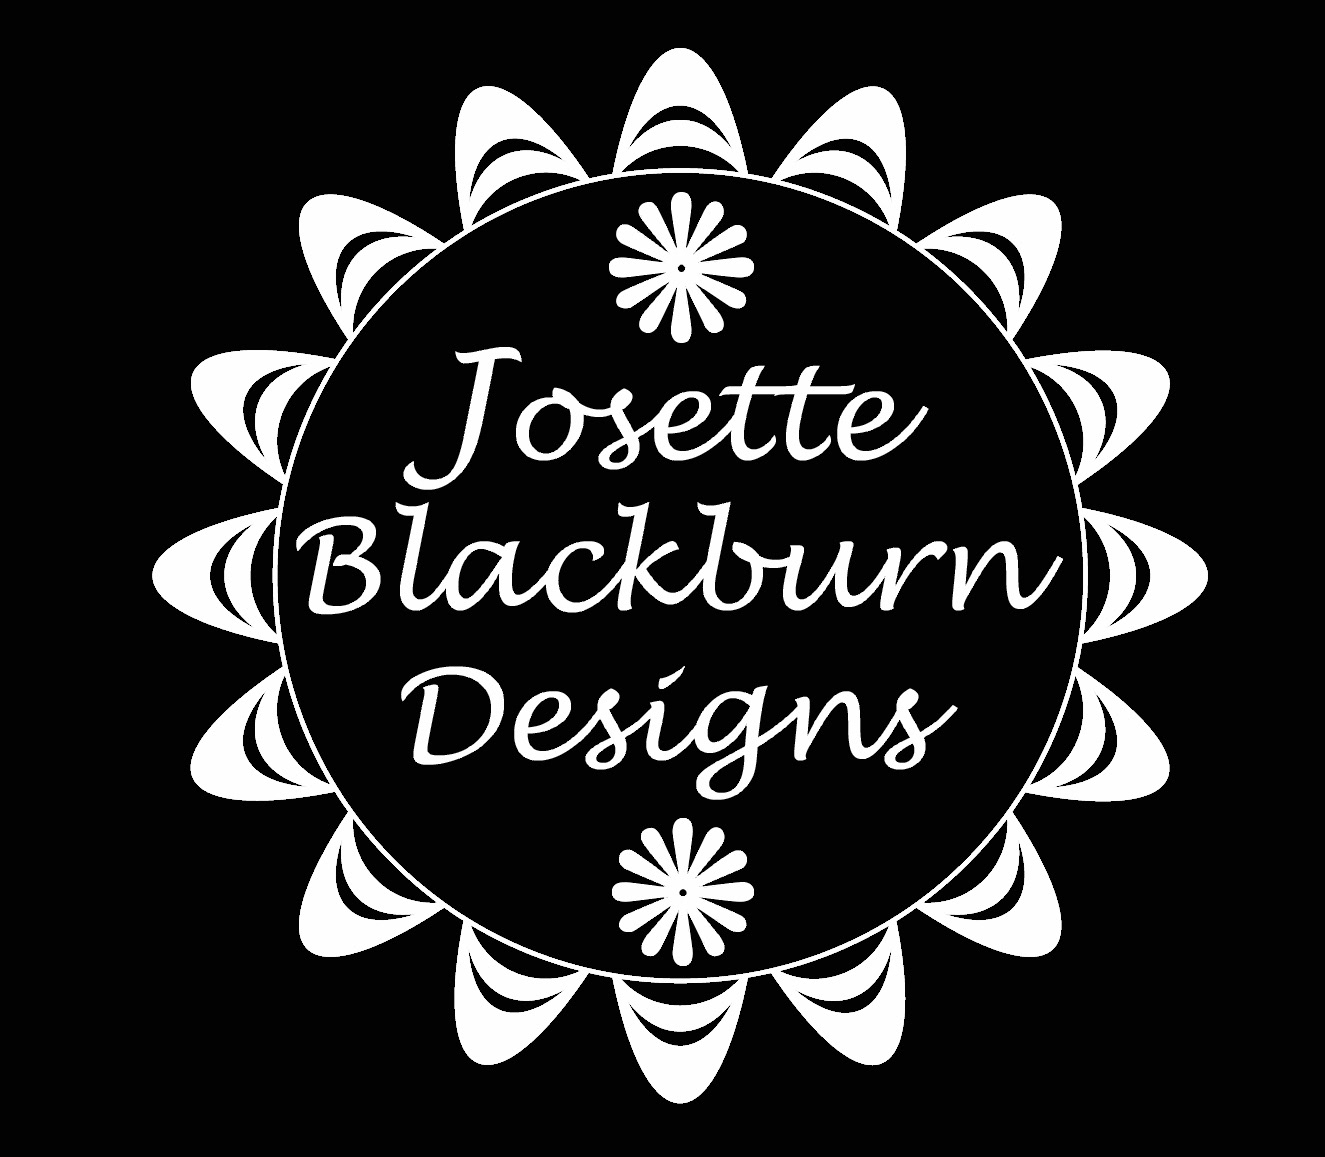 Josette Blackburn